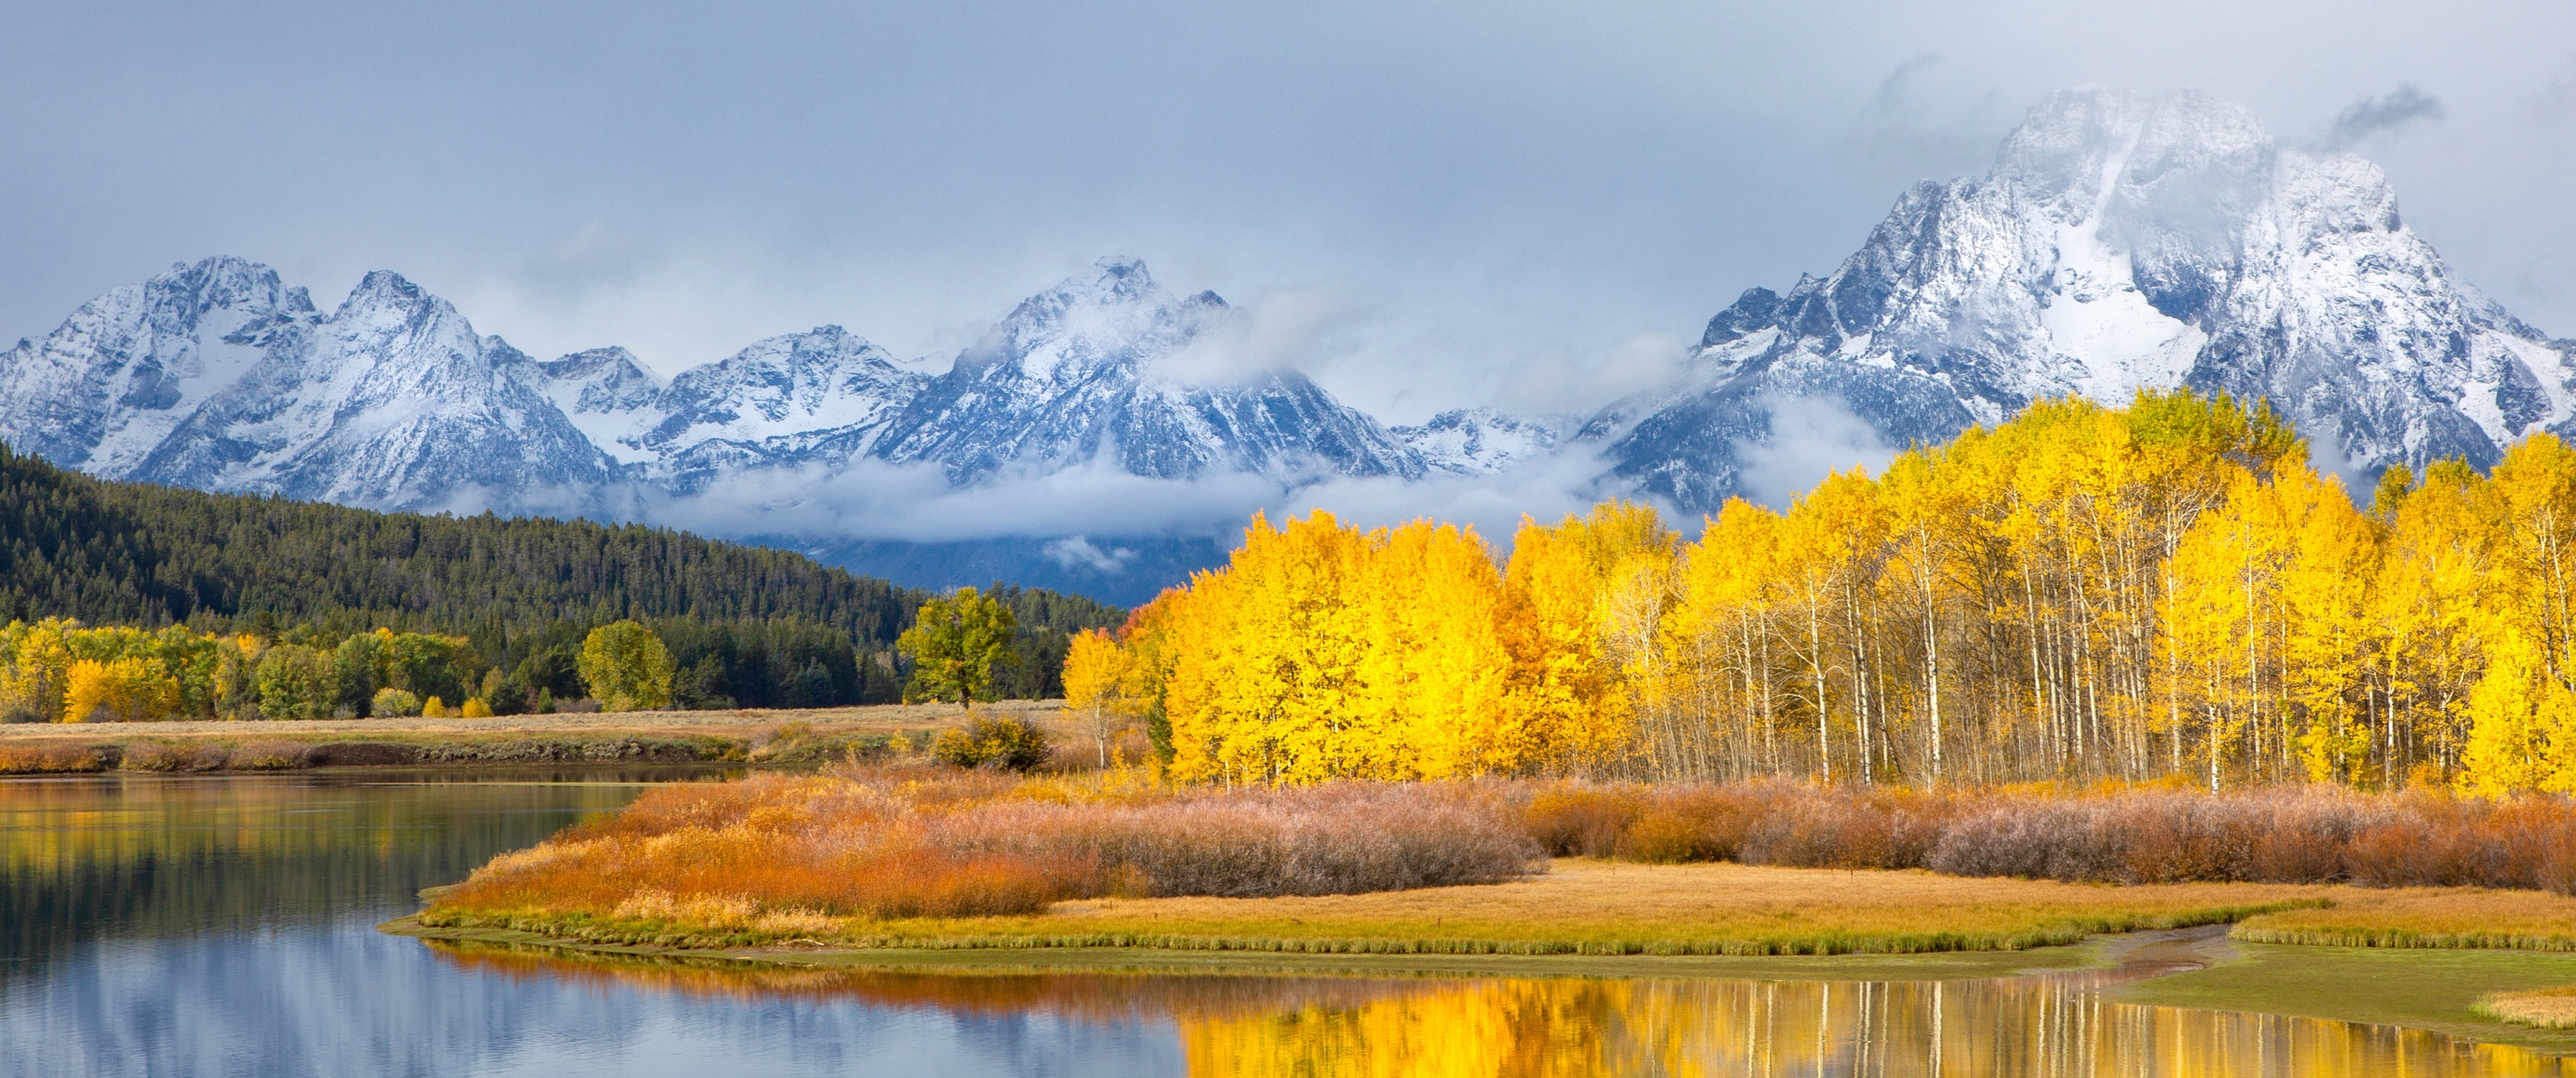 Aspen Tree, Winter wonderland, Lakeside beauty, Cold season charm, 3440x1440 Dual Screen Desktop